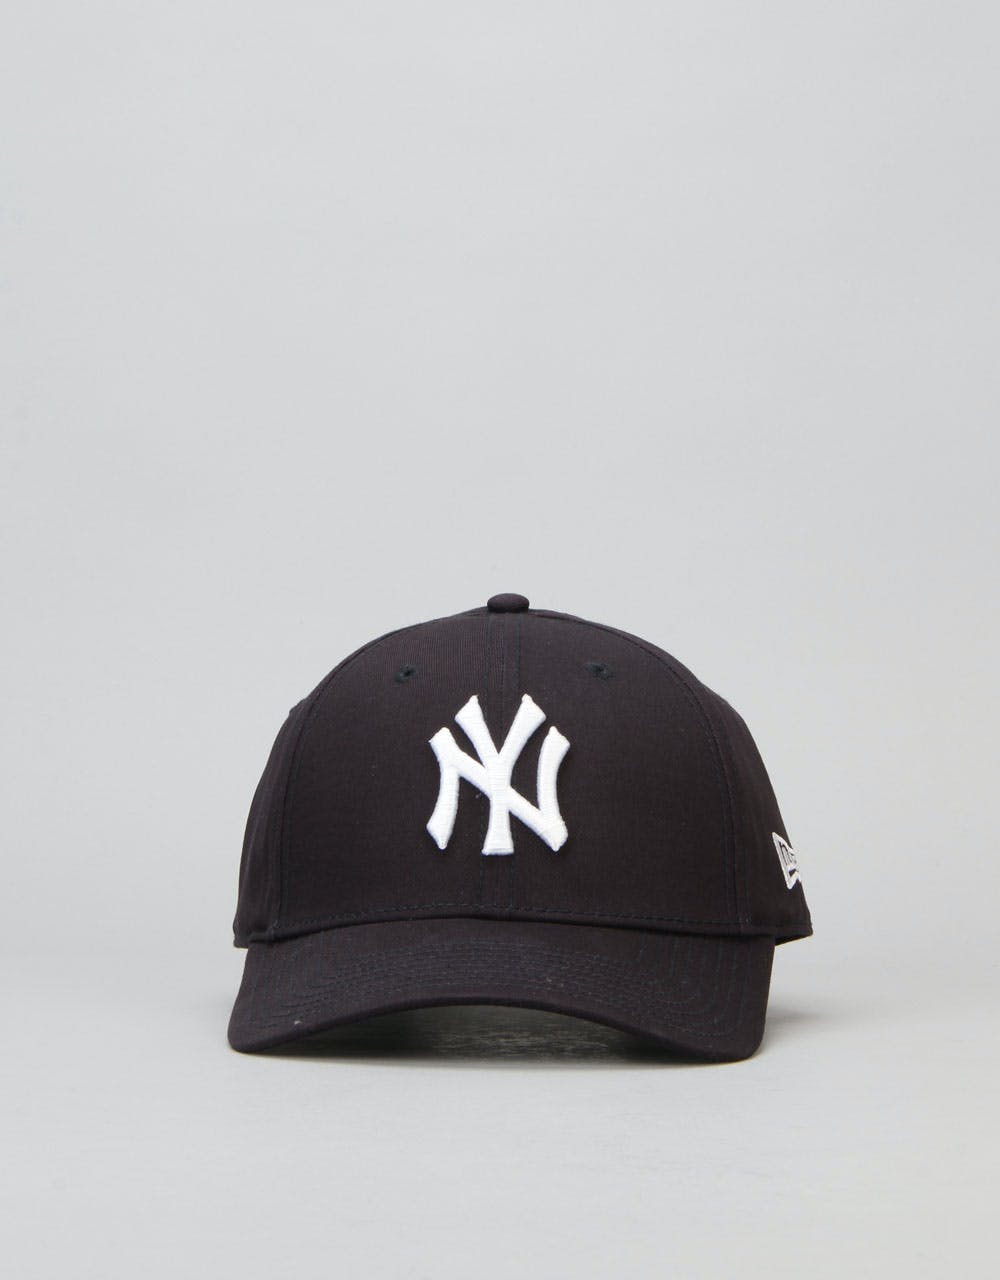 New Era 9Forty MLB New York Yankees Cap - Navy/White